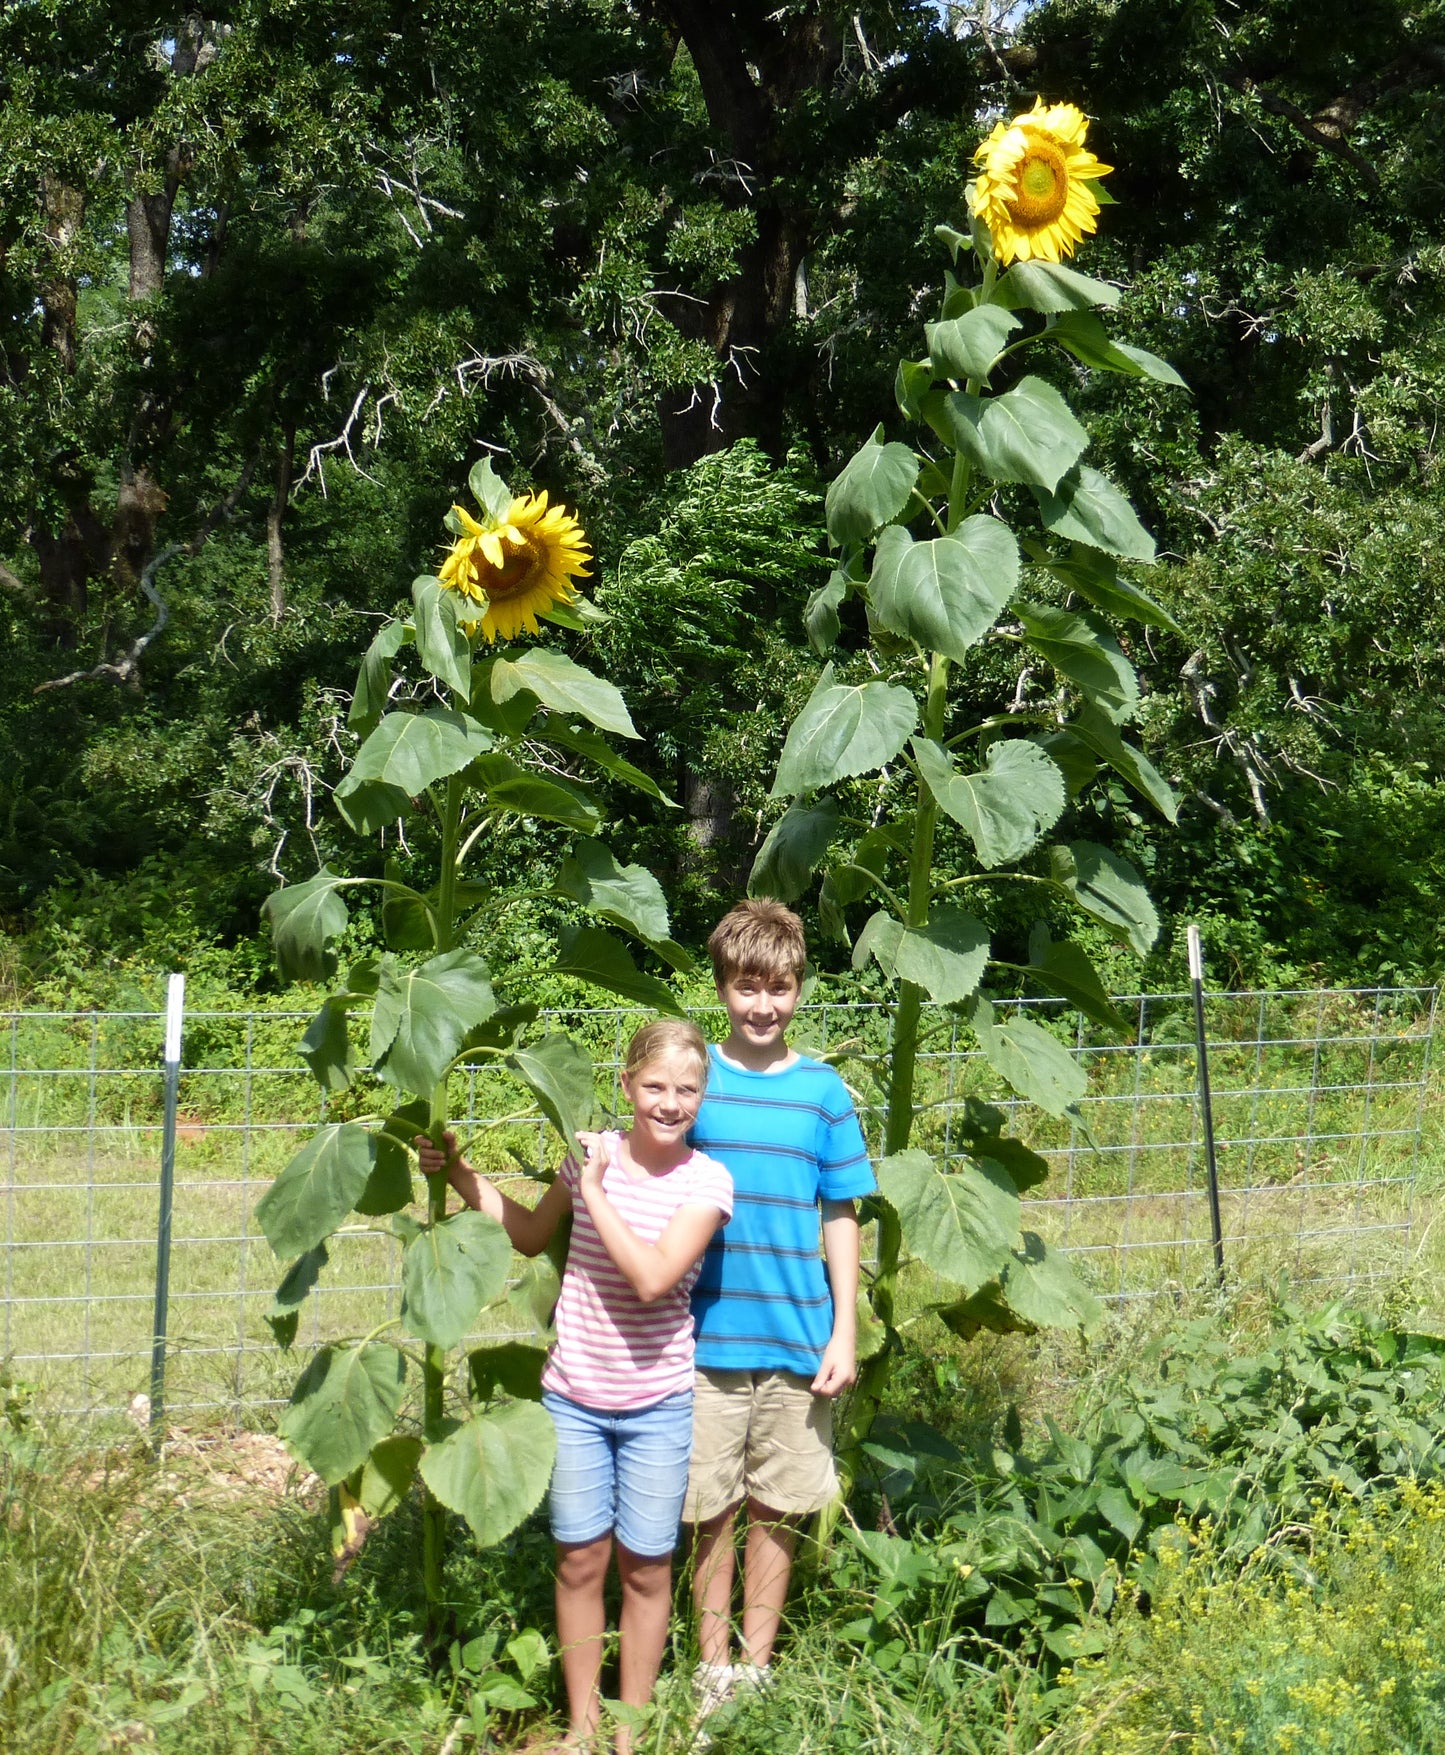 Sunflower, Giant Greystripe